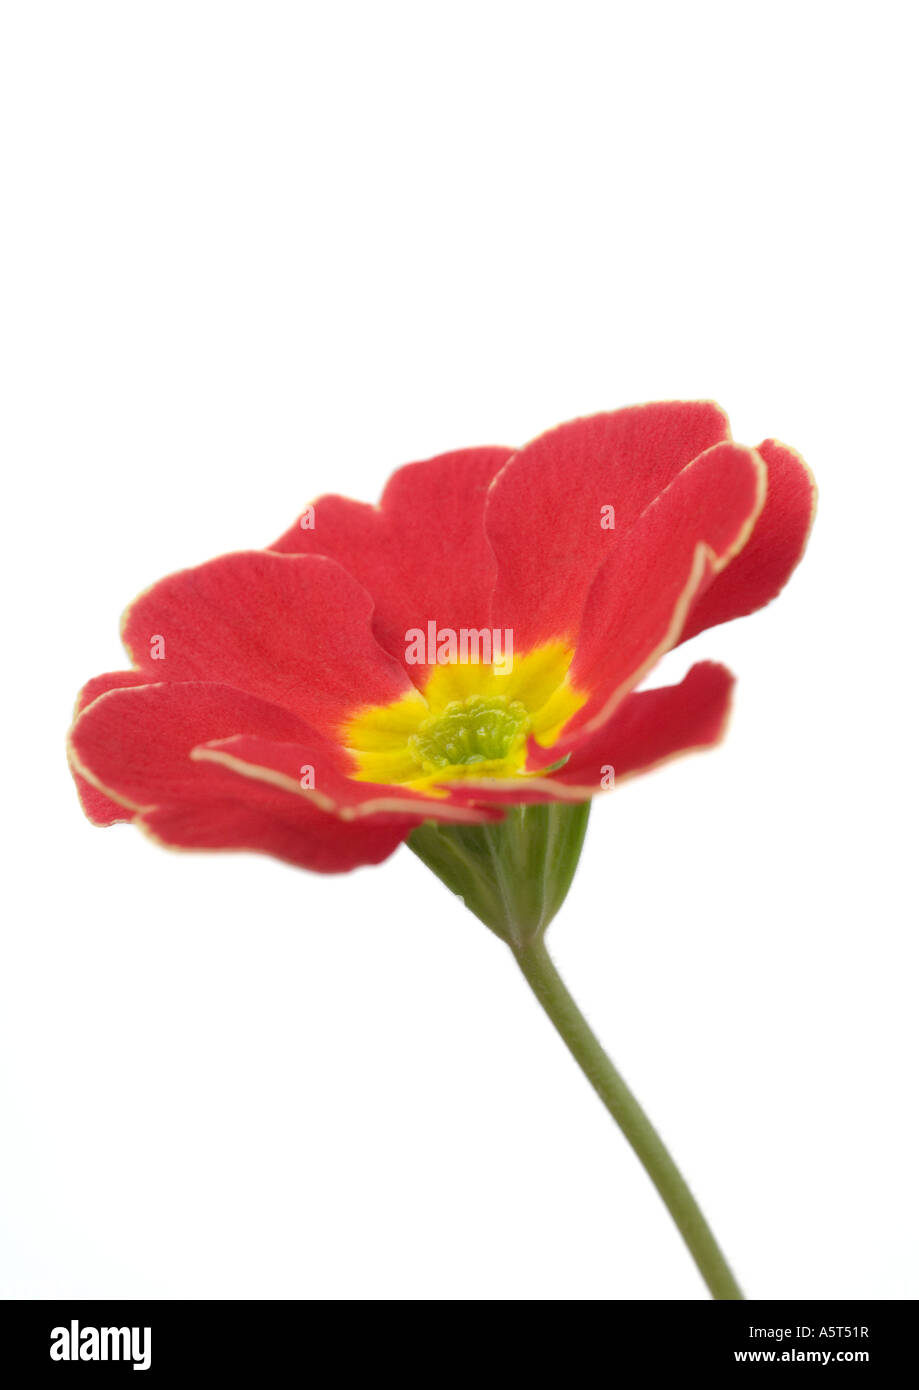 Red primrose flower, close-up Stock Photo